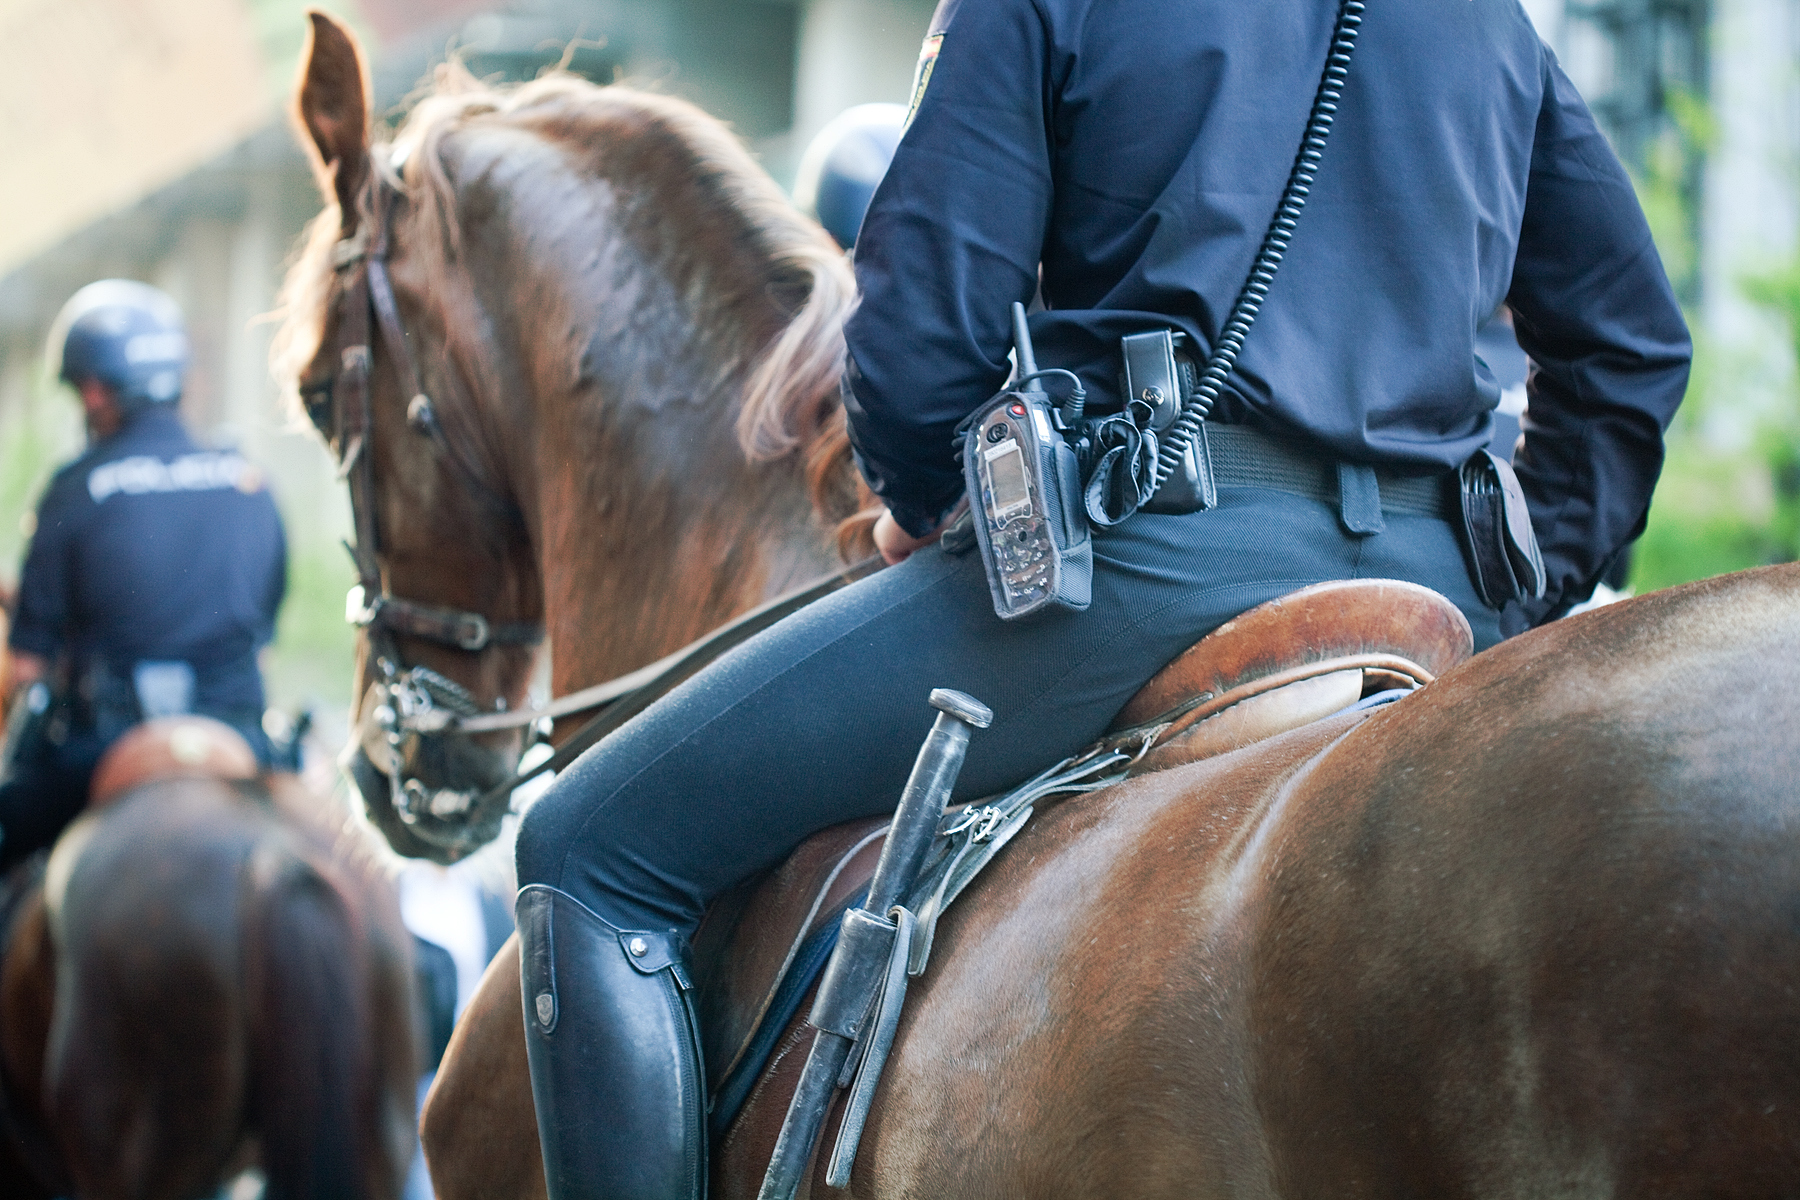 Mounted Police Units